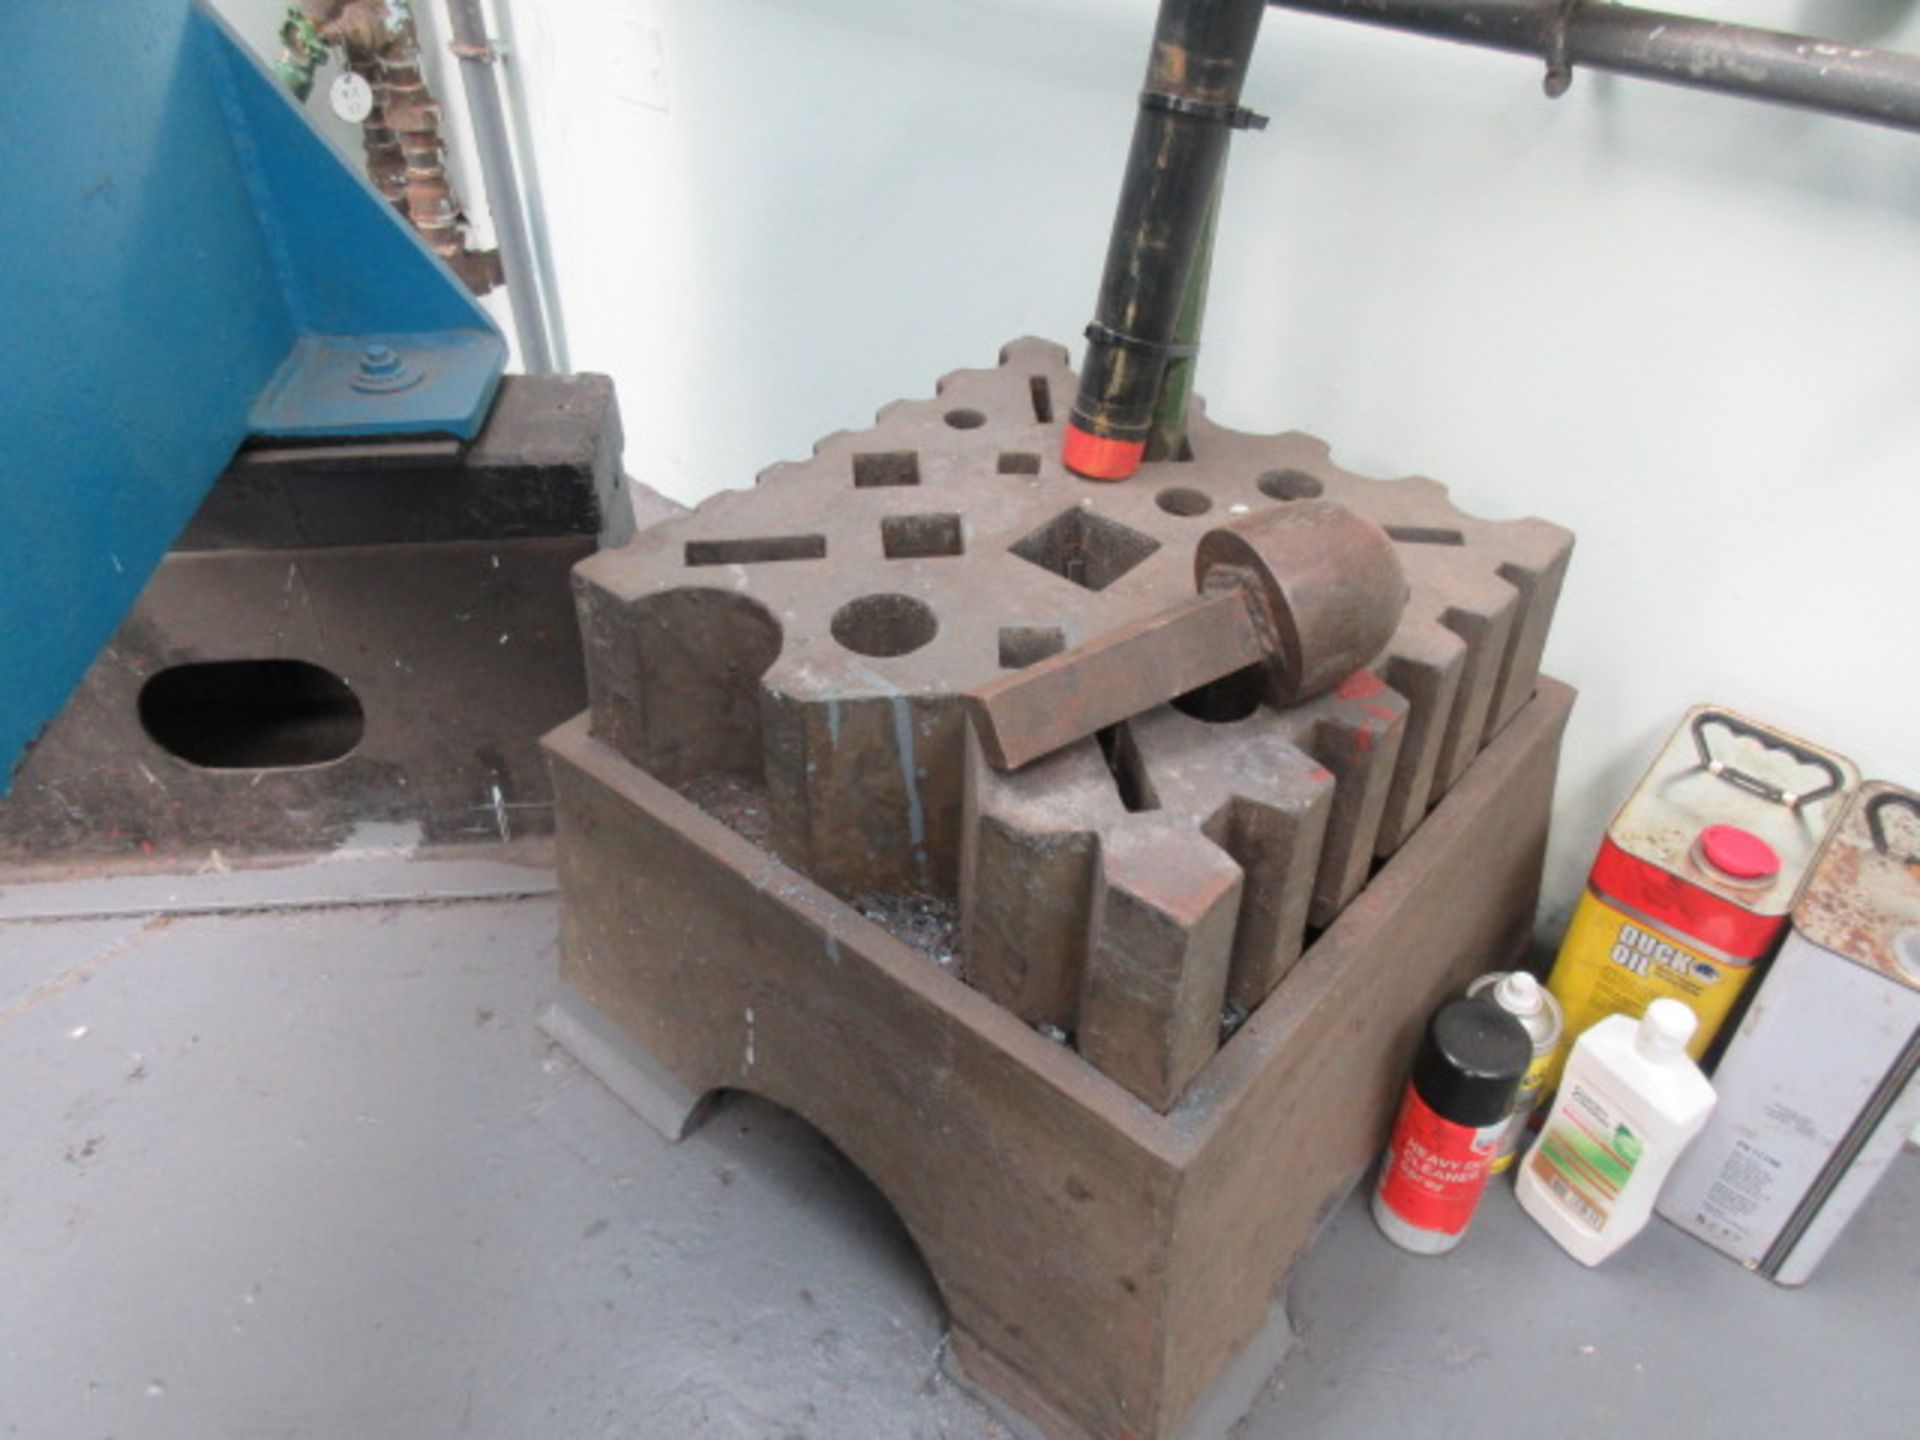 Blacksmiths cast iron tool block & base. Holehouse Rd. Ground floor engineering.